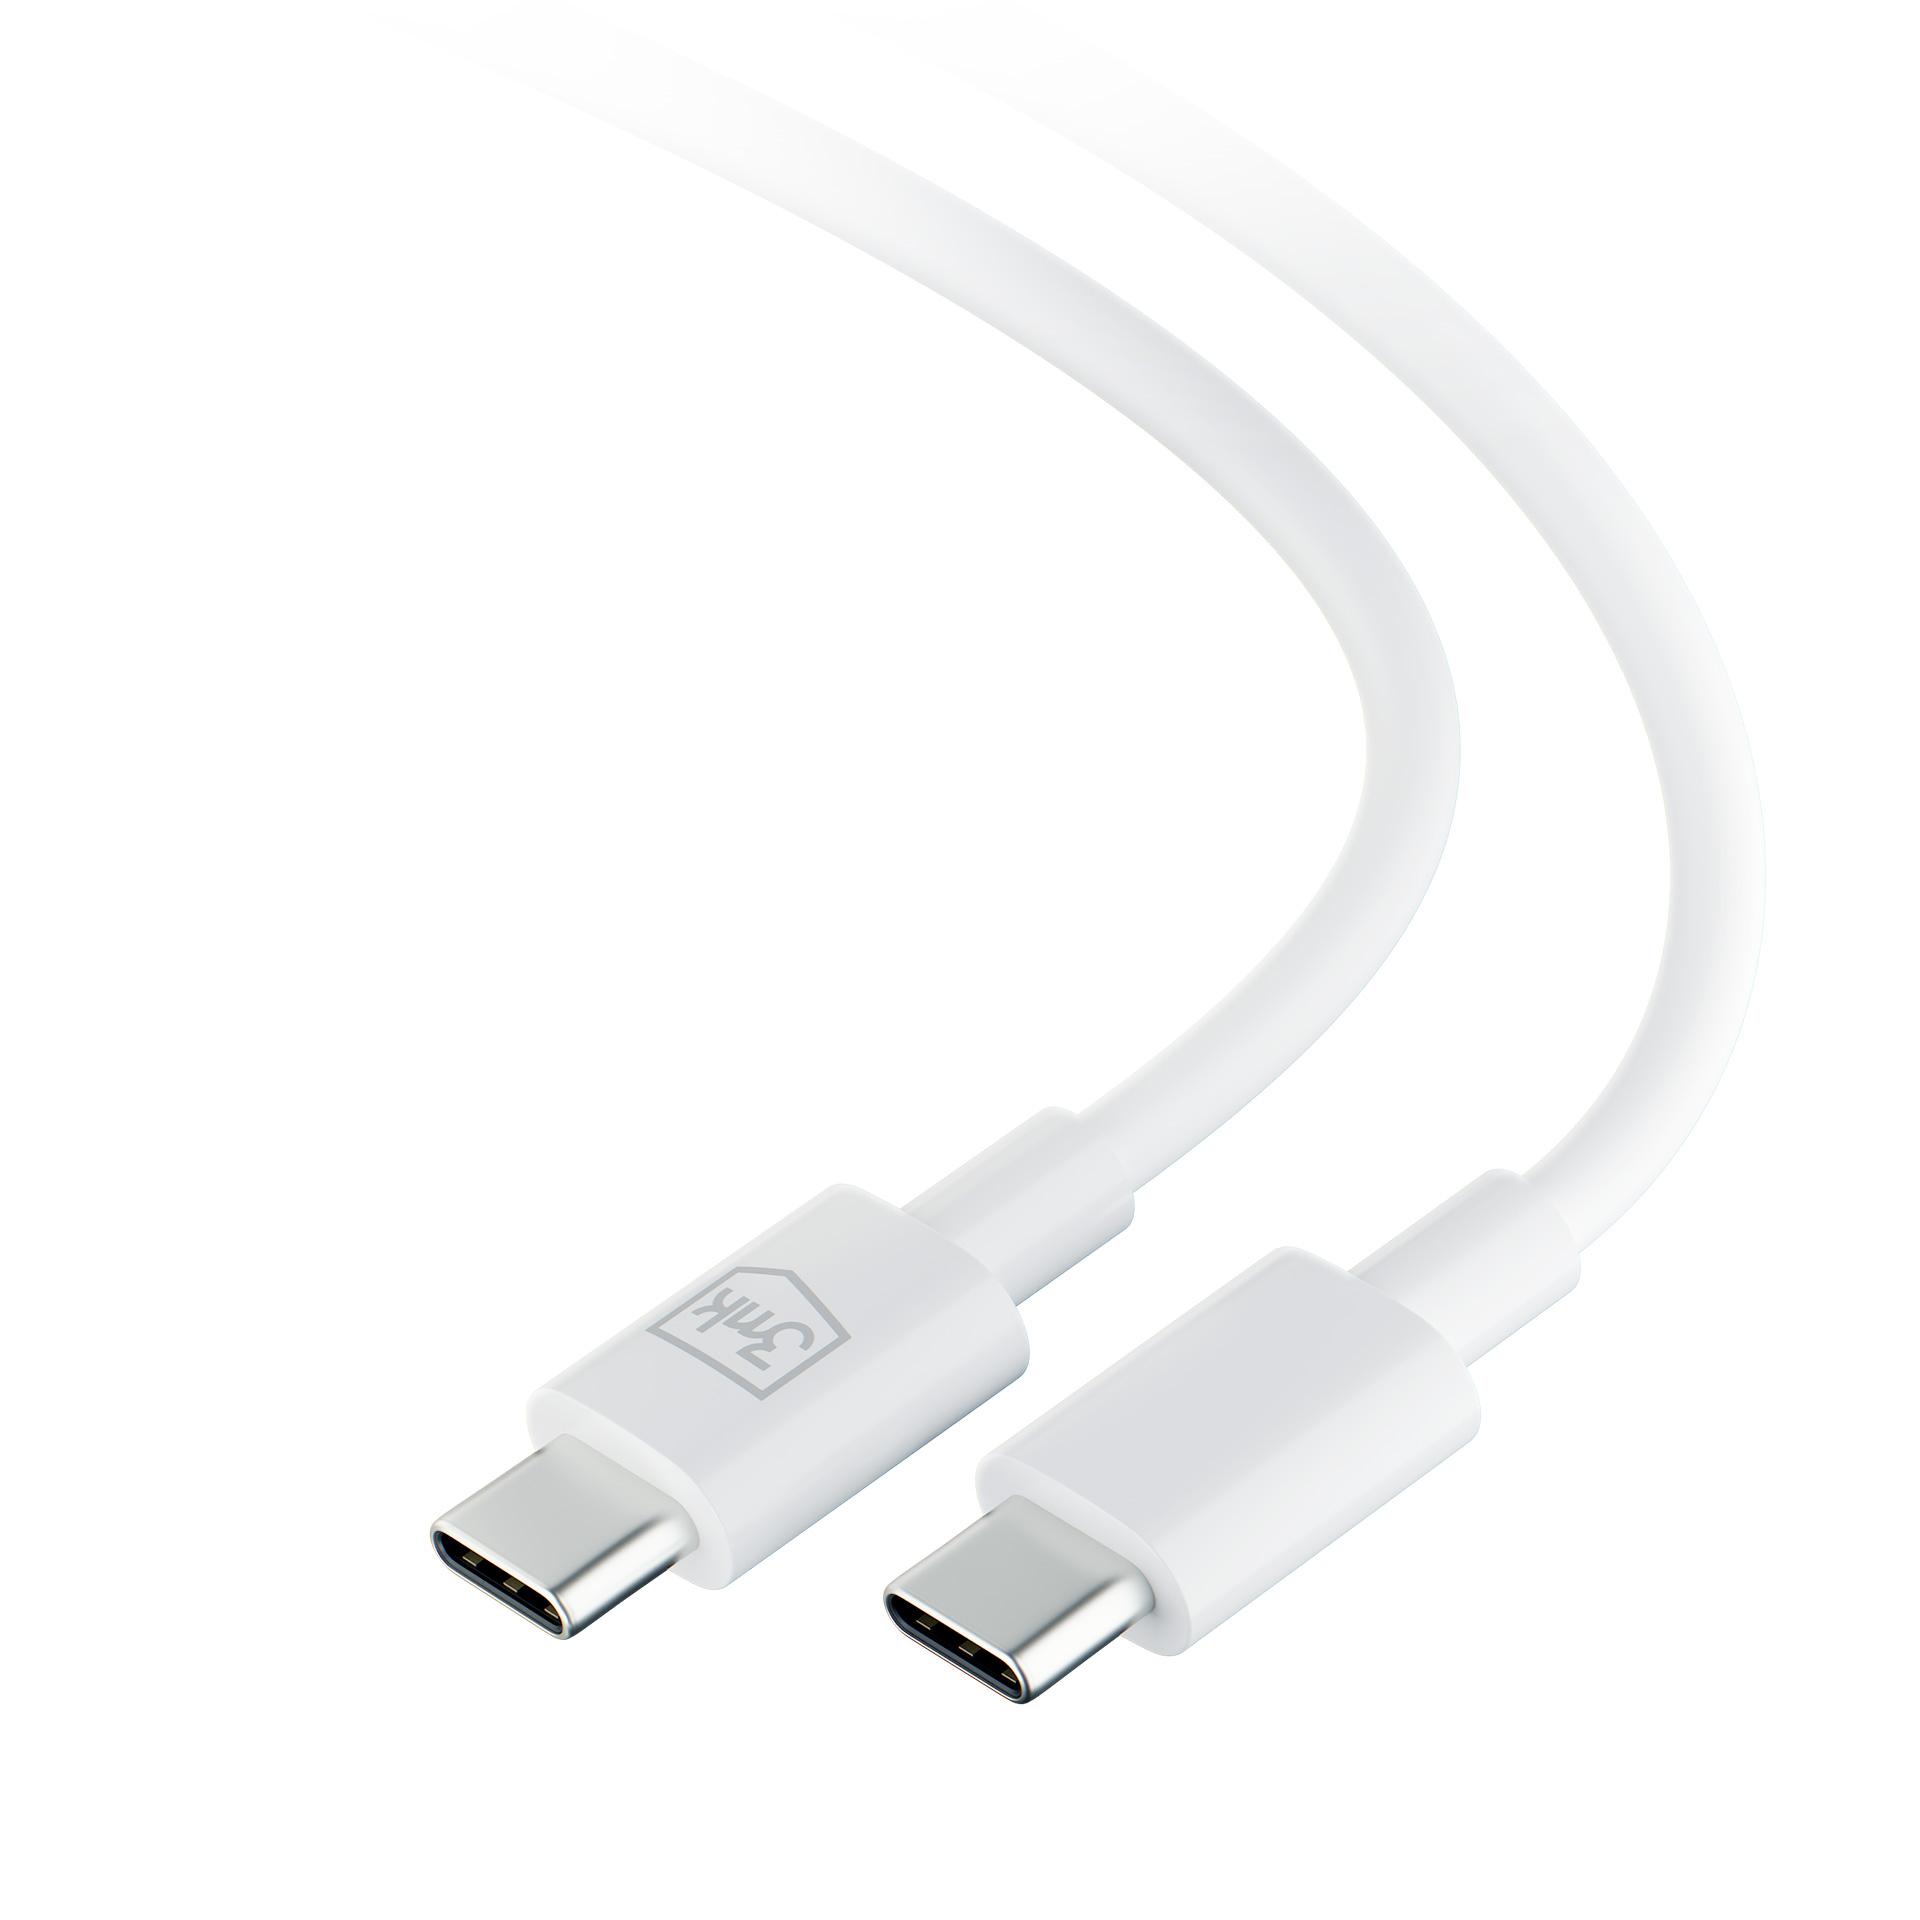 3mk Kabel Hyper Cable USB-C do USB-C 100W 1.2m biały